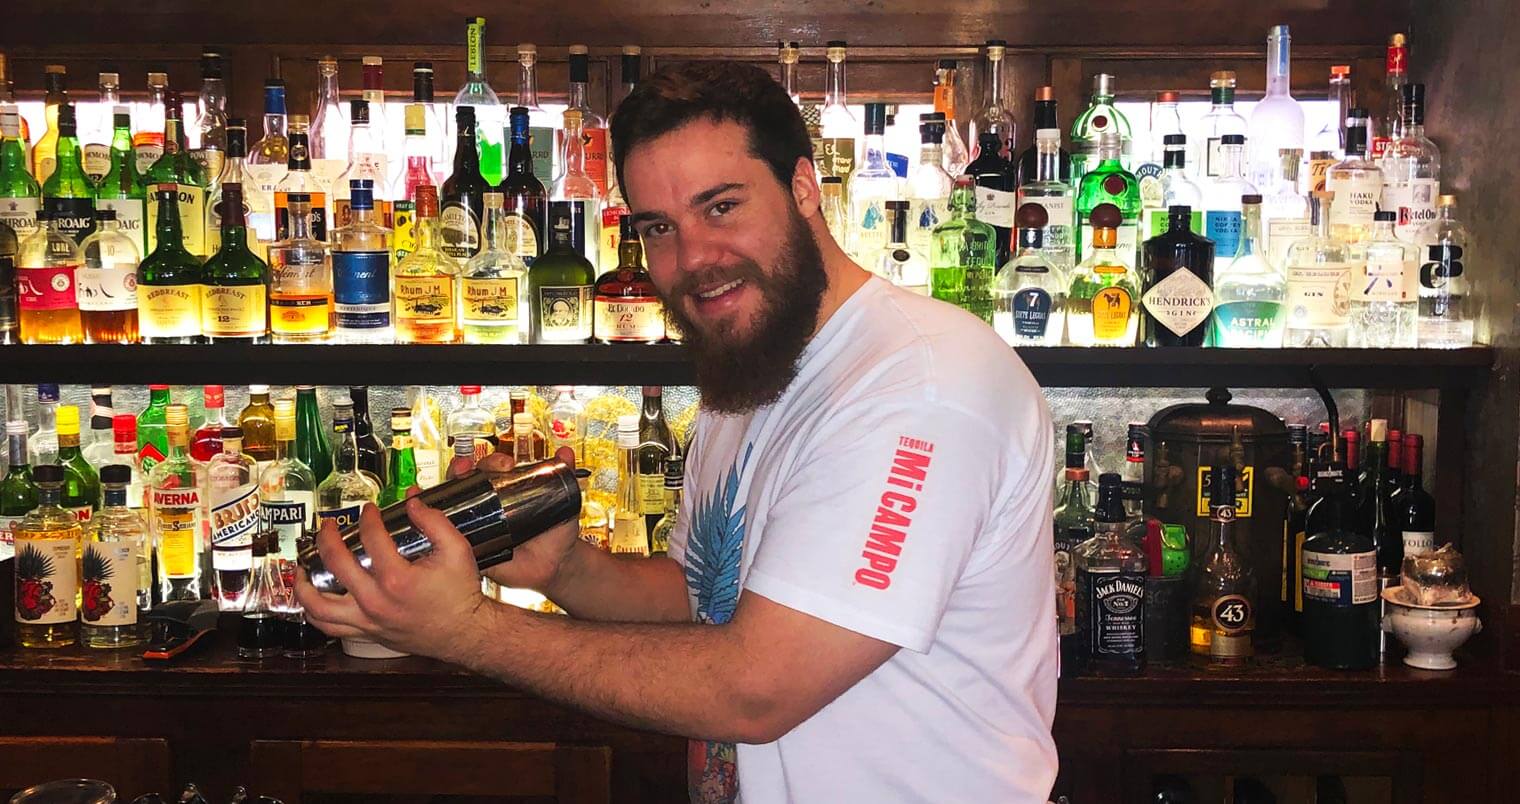 Cameron Masden behind the bar shaking, featured image